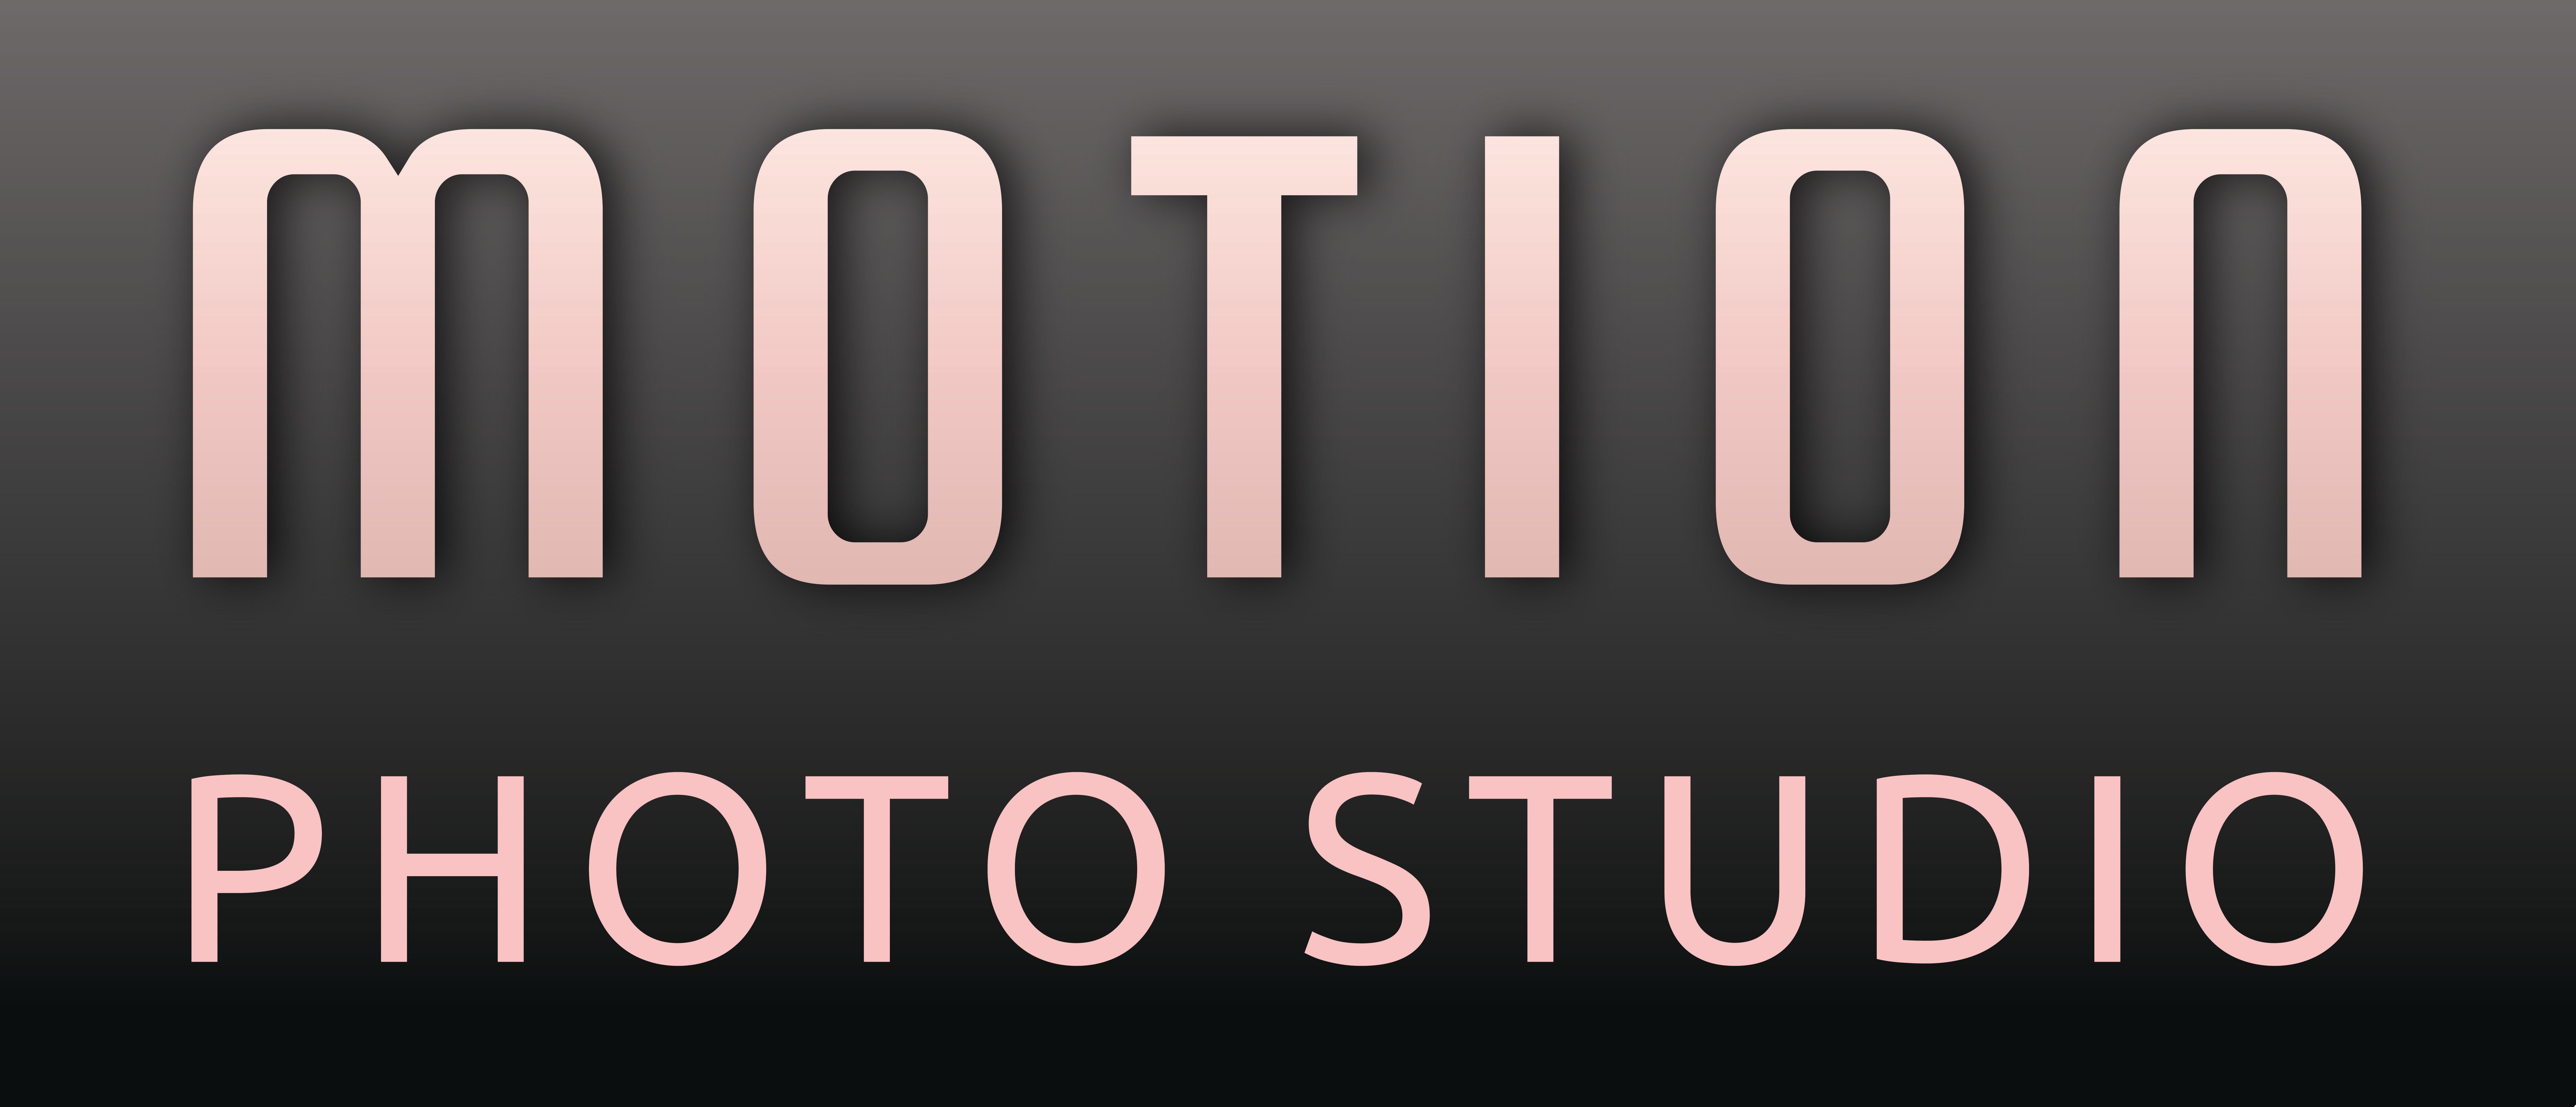 Abstract Entertainment Ltd t/as Motion Photo Studio